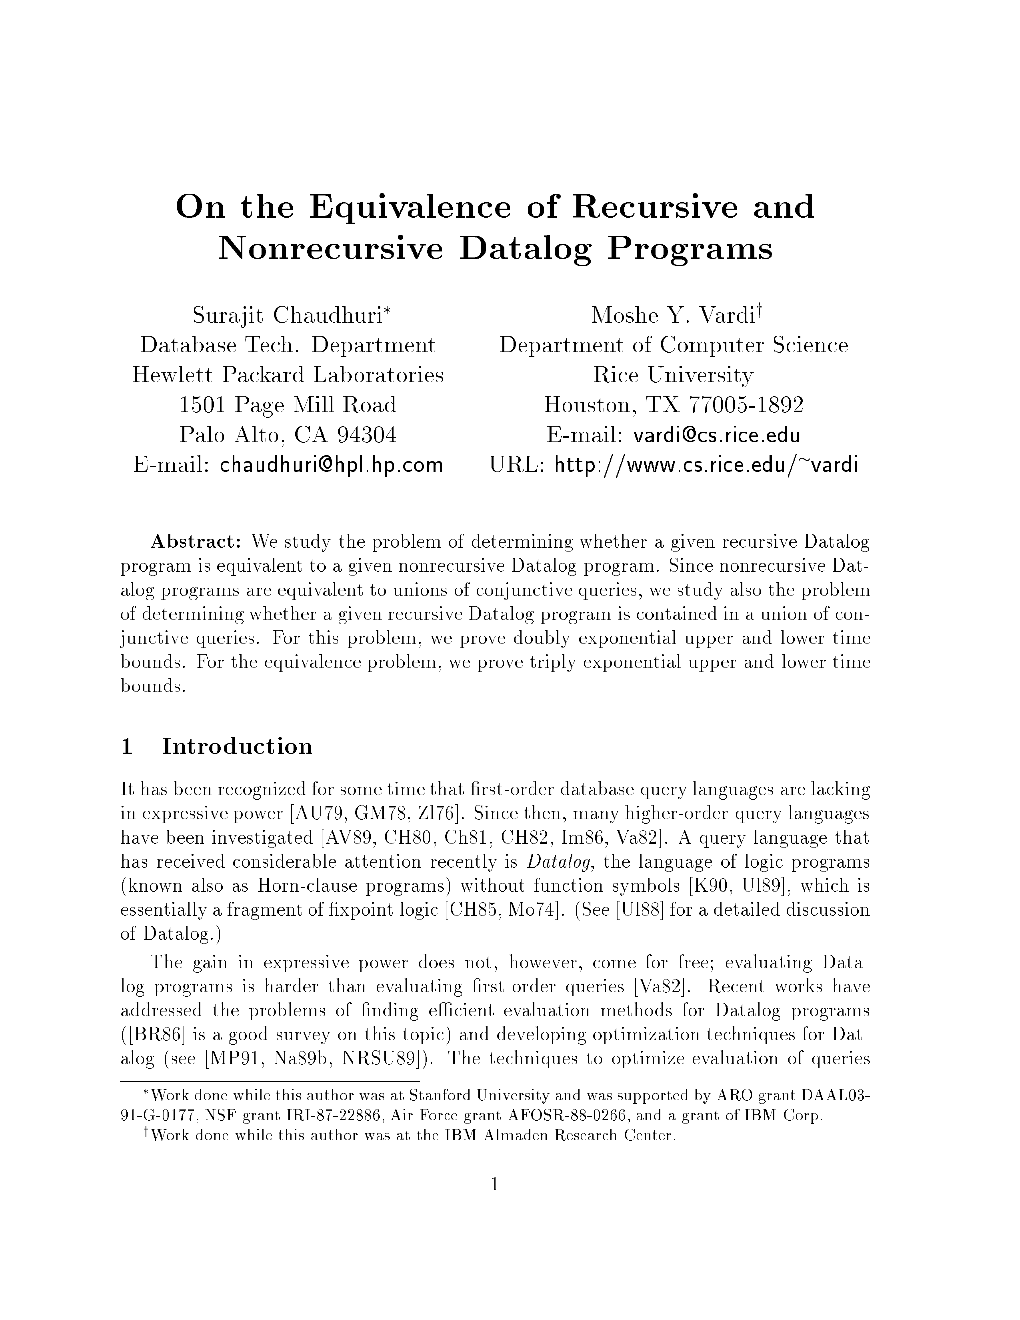 On the Equivalence of Recursive and Nonrecursive Datalog Programs